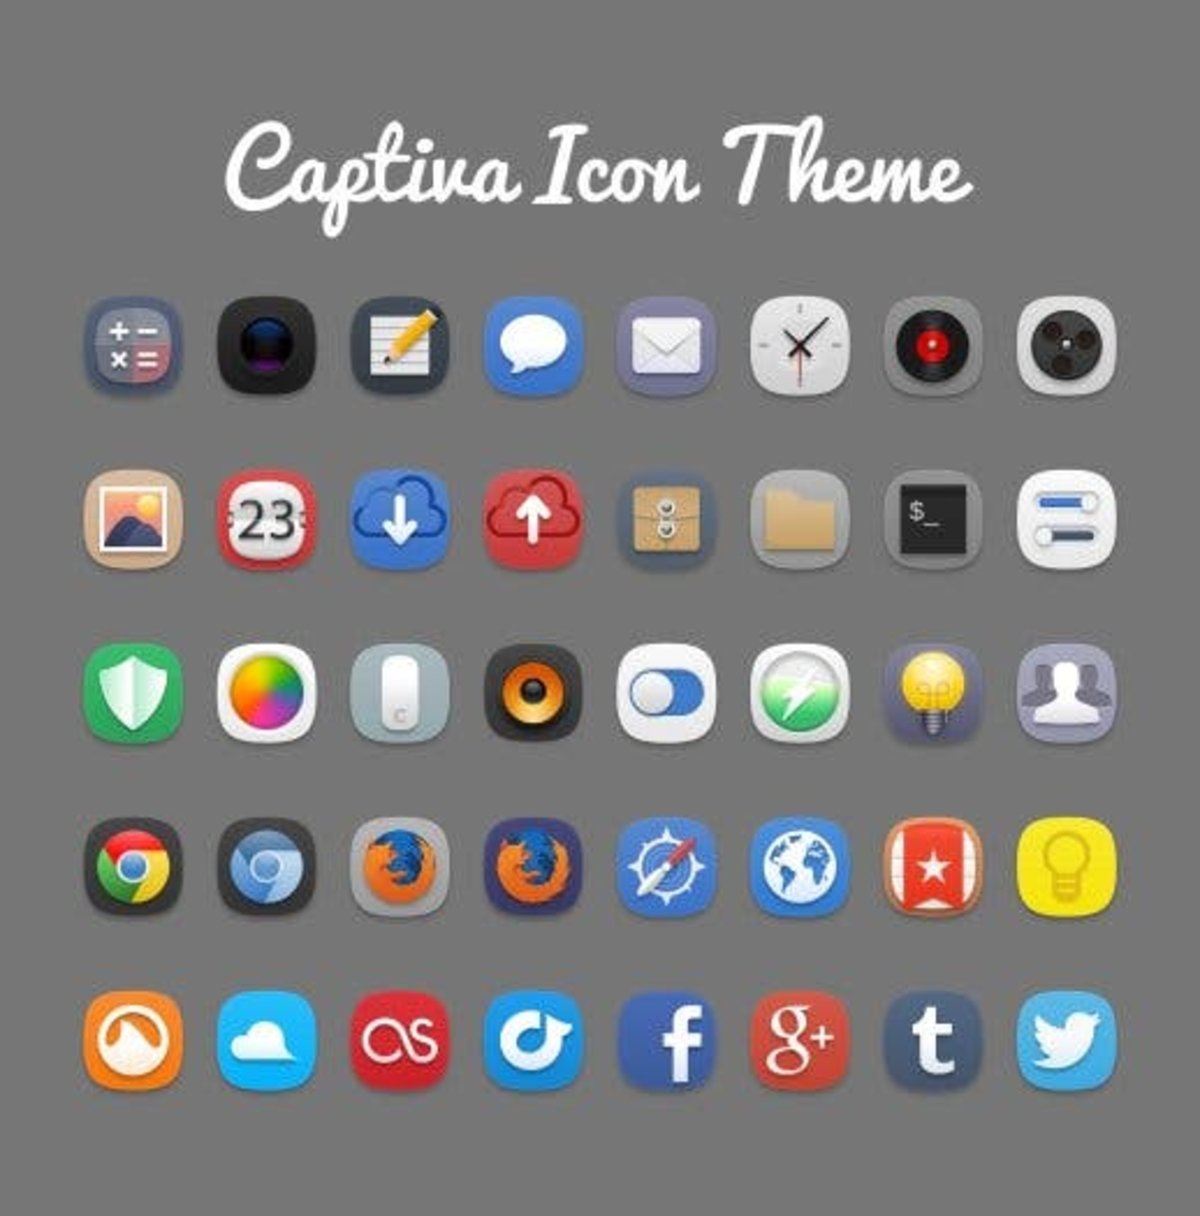 captiva icon theme muestra